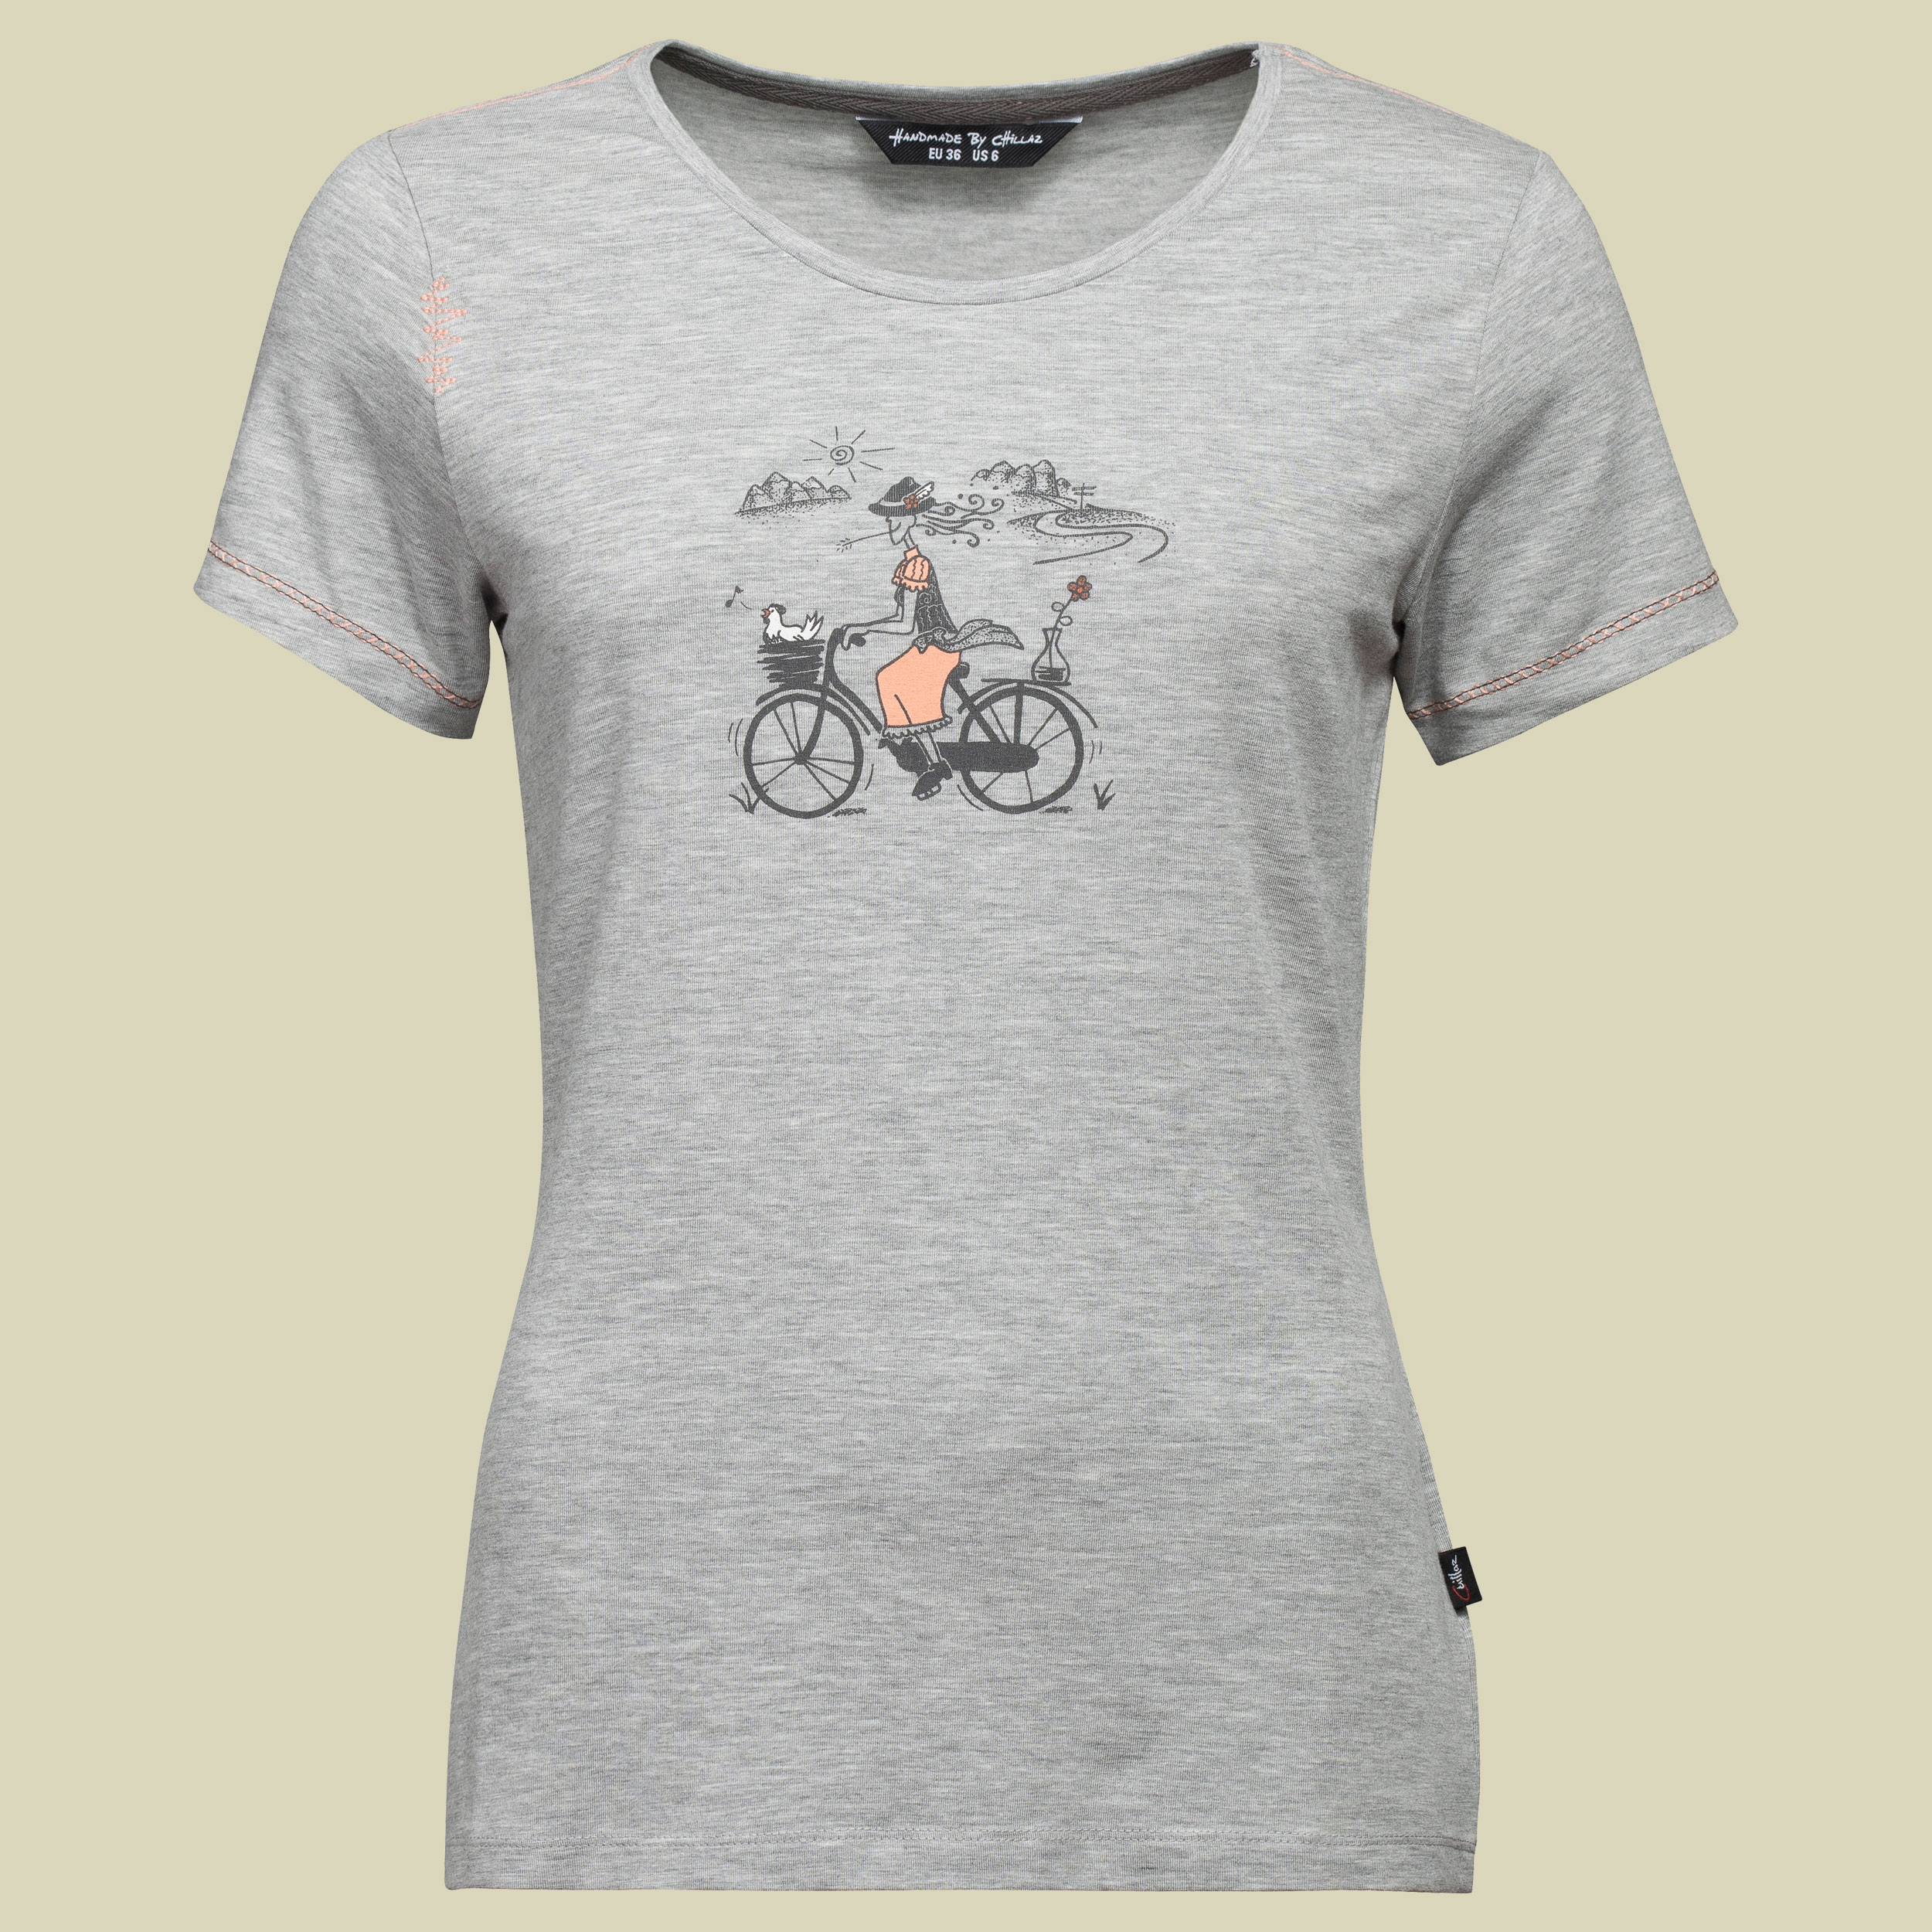 Saile Tyrolean Trip T-Shirt Women Größe 38 Farbe grey melange